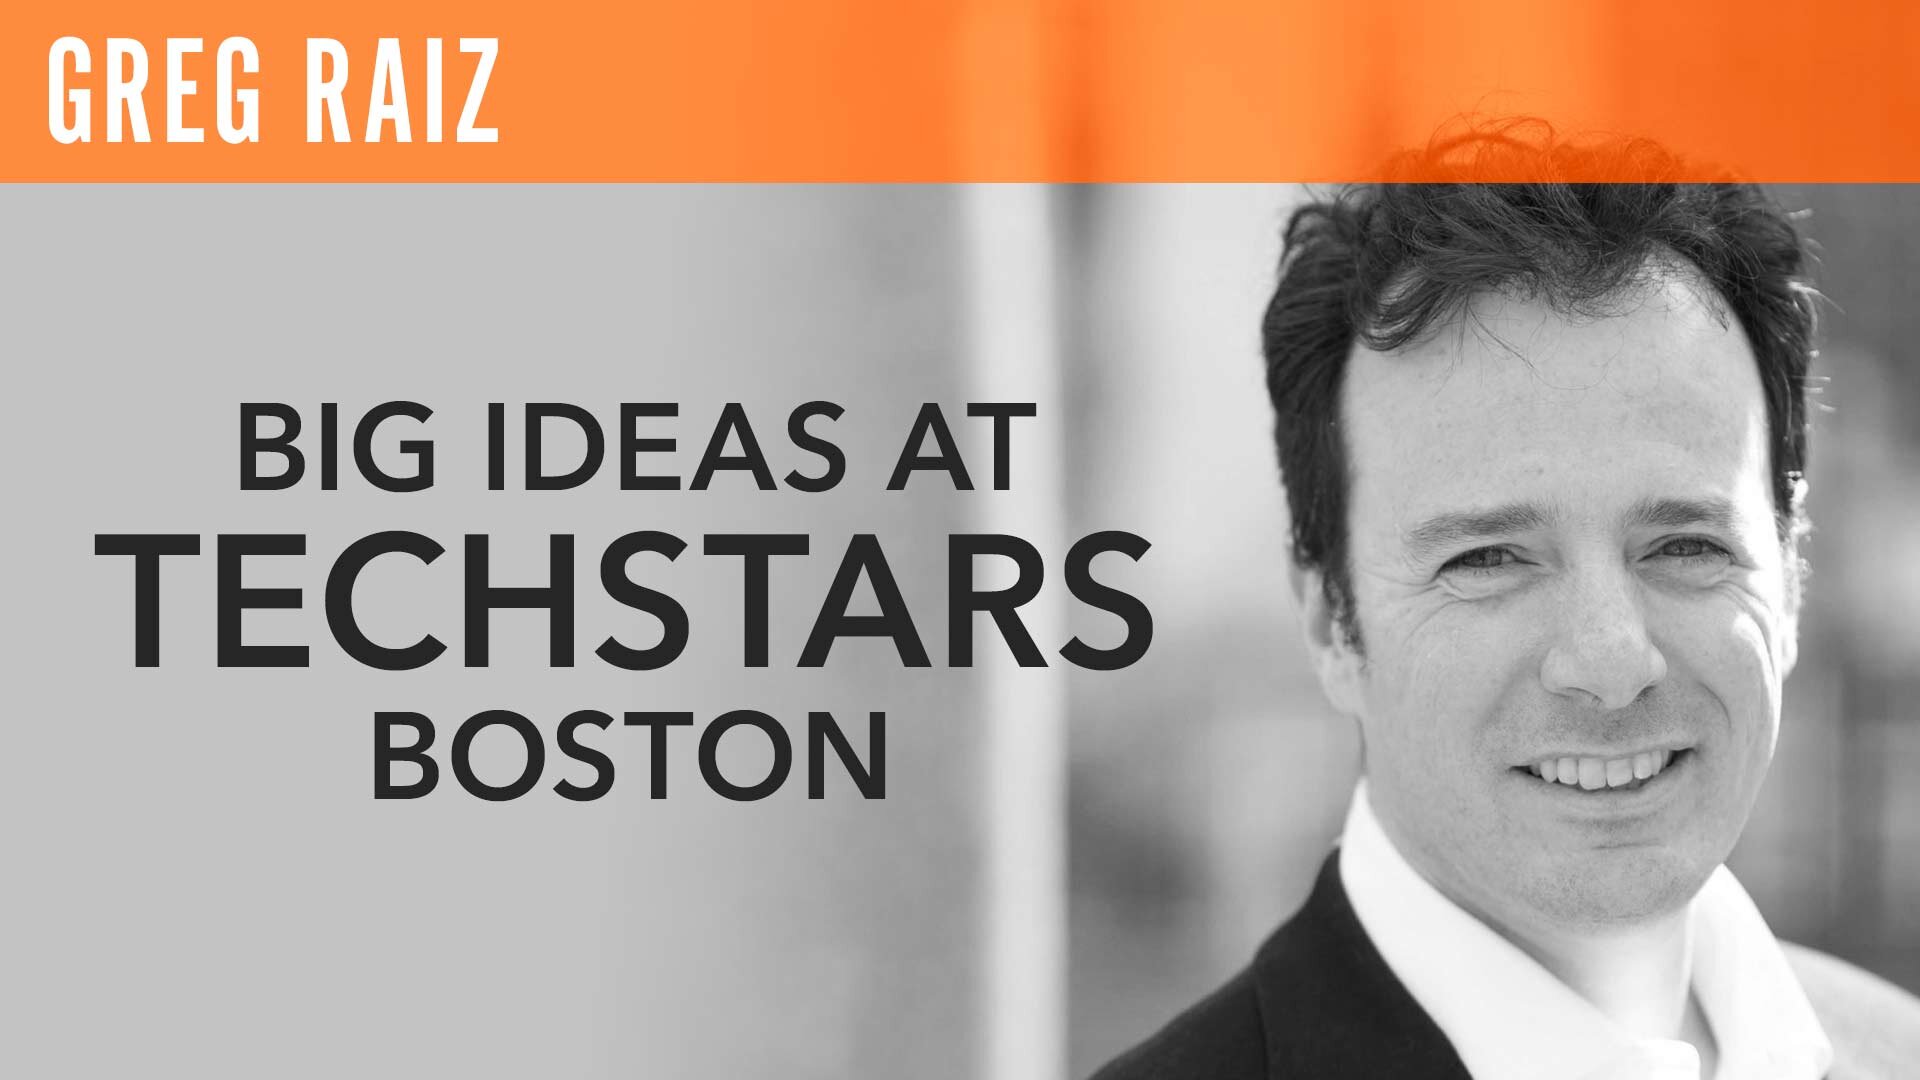 Greg Raiz, "Big Ideas at Techstars Boston"